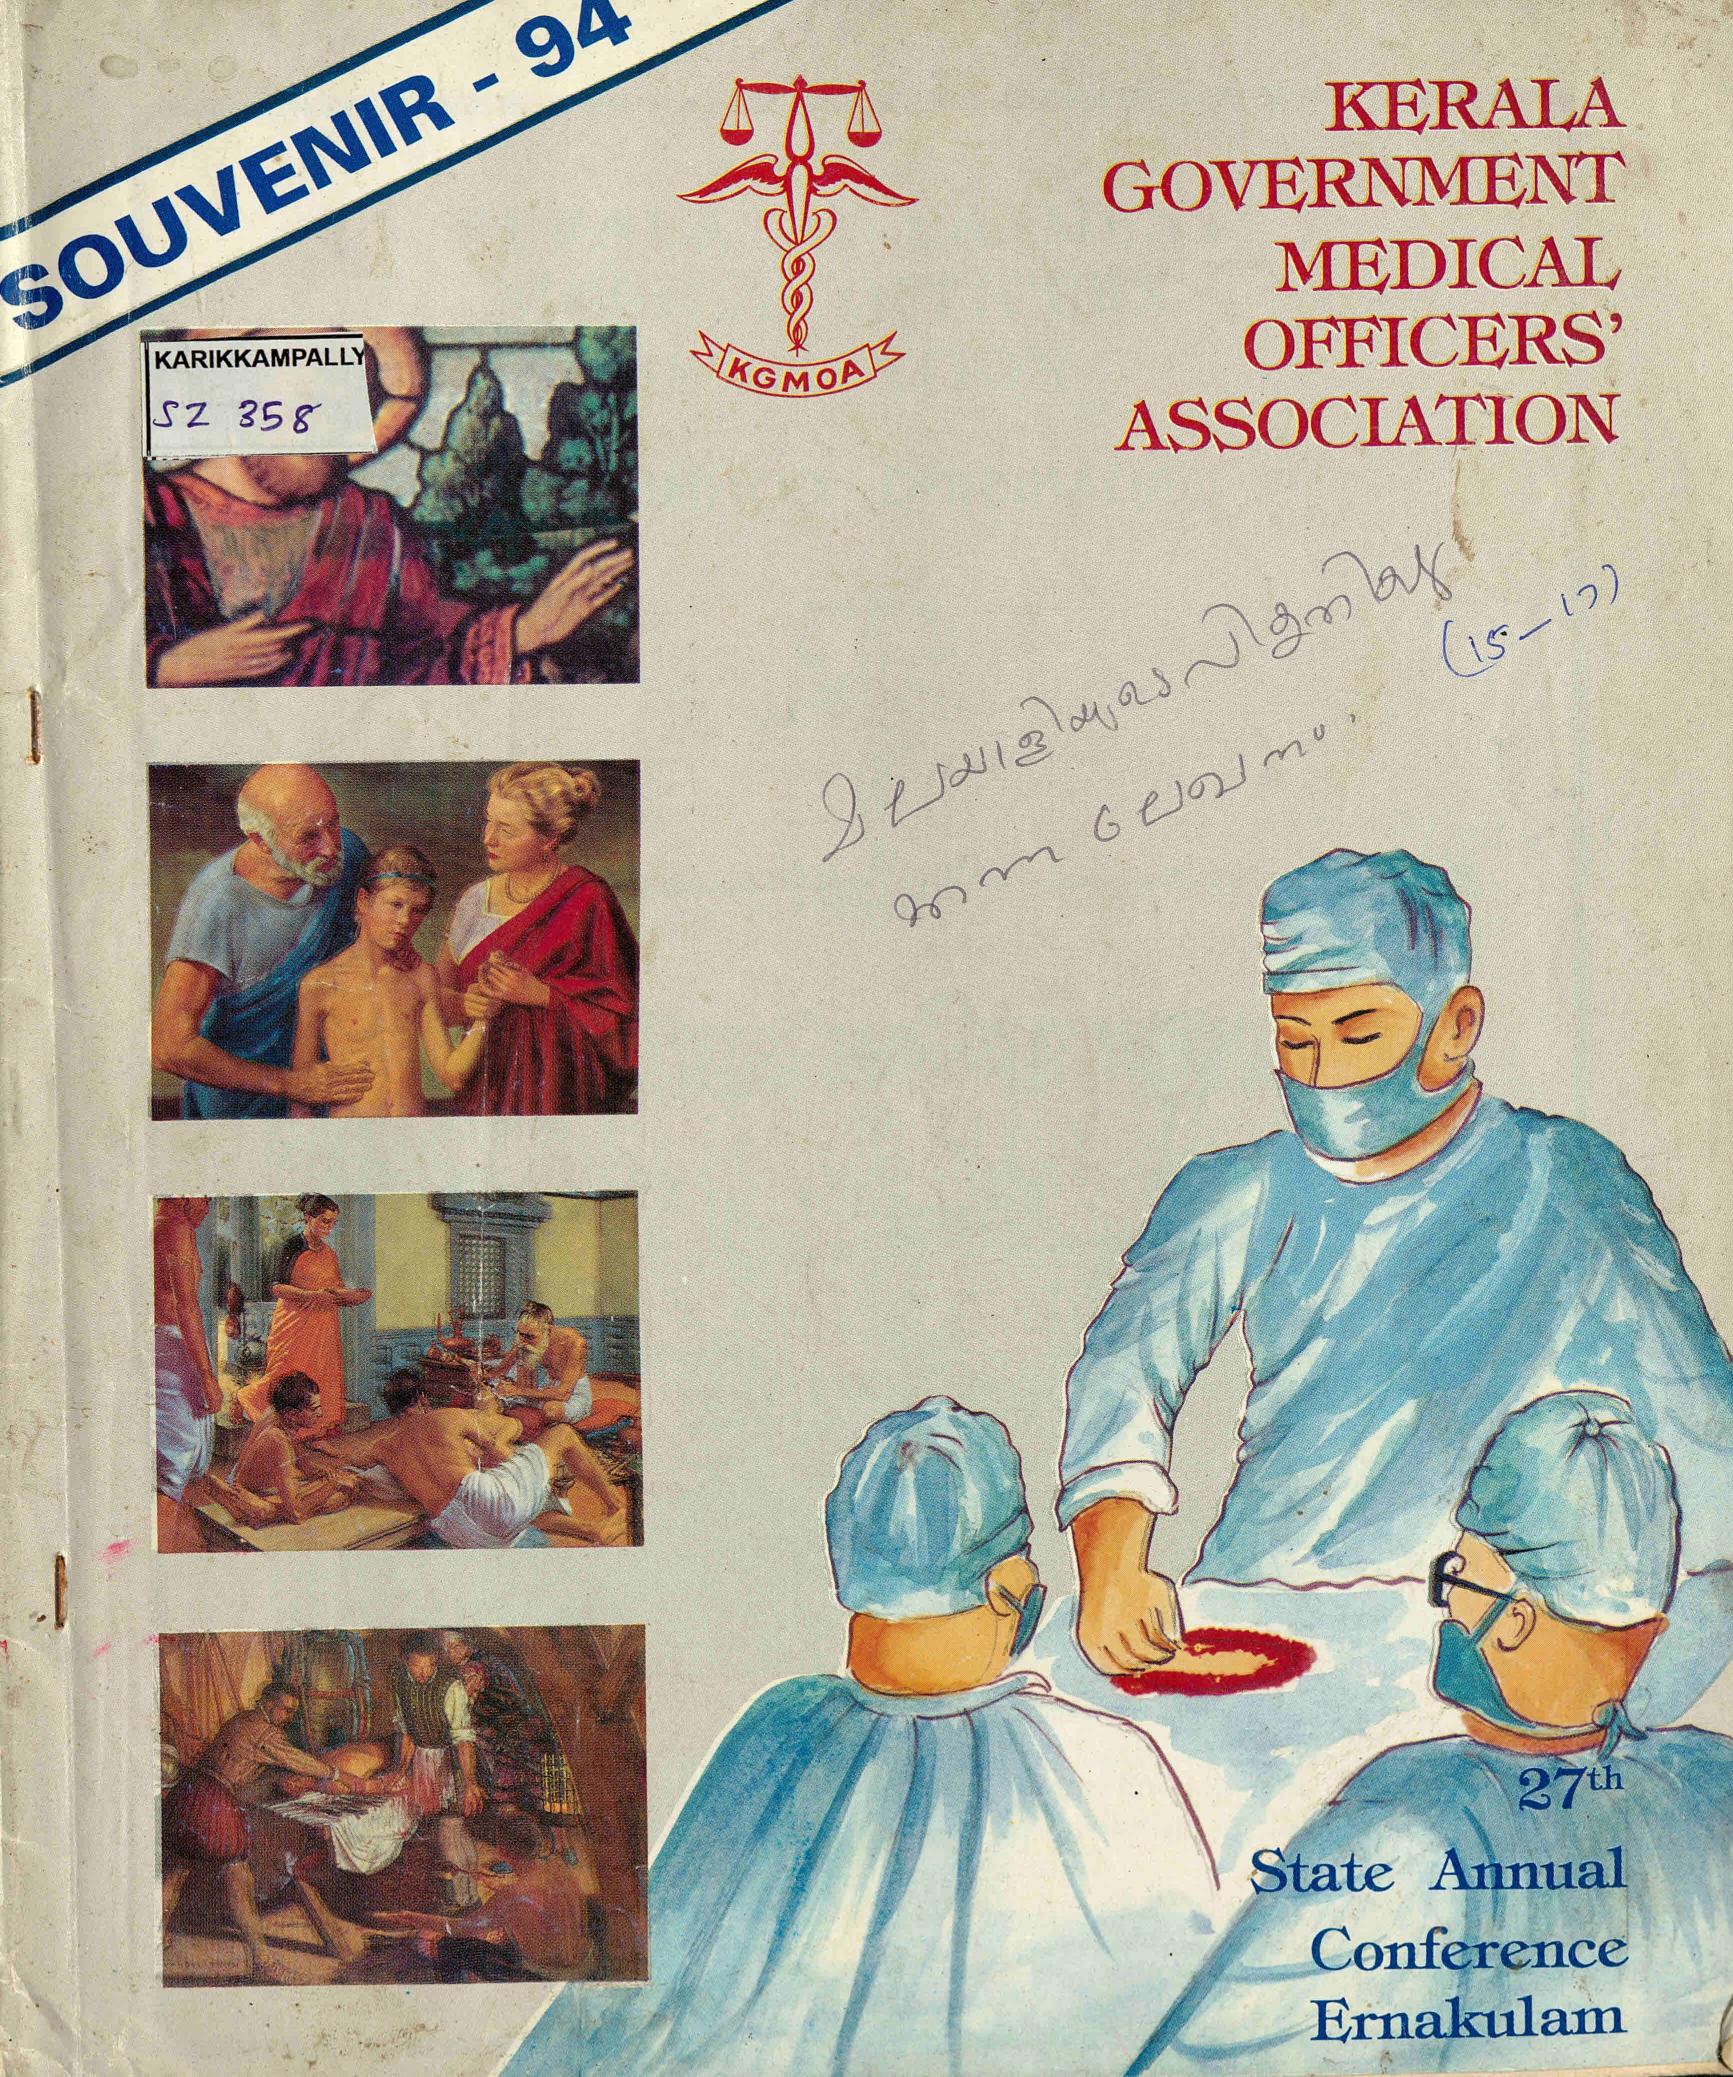  1994 - Kerala Government Medical Officers' Association - Souvenir